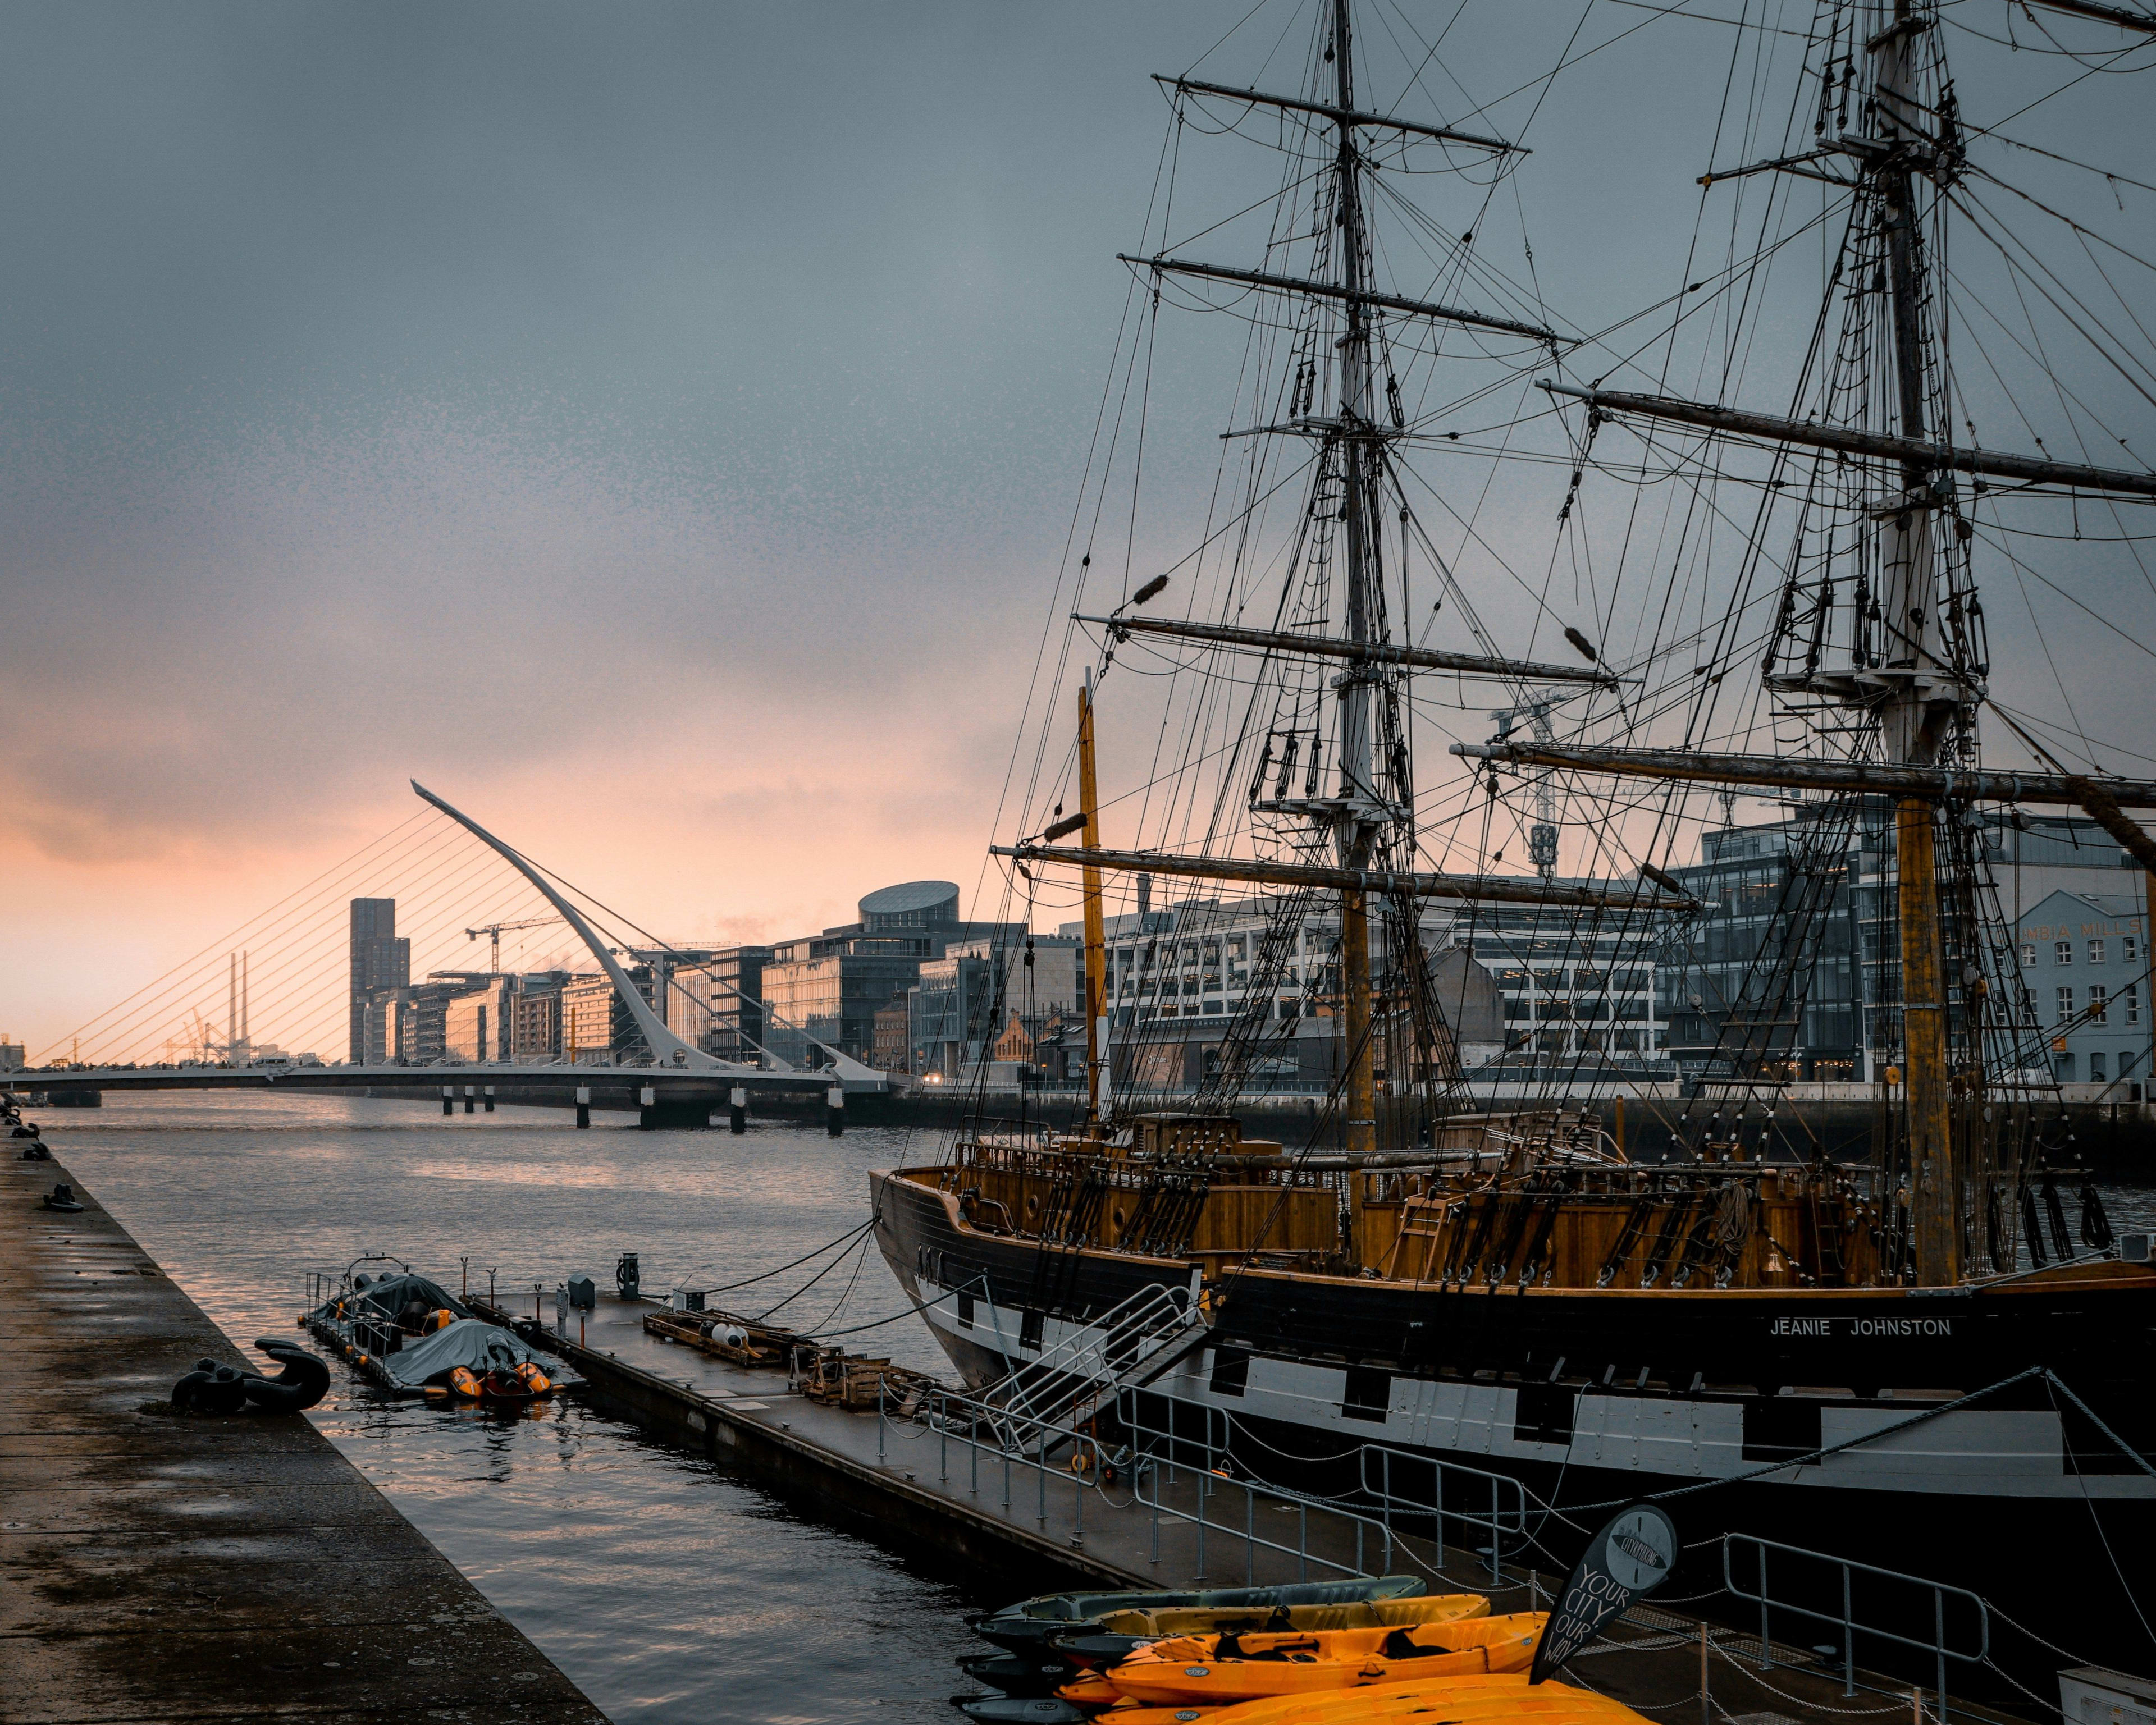 The Jeanie Johnston - A replica of famine ship located in Dublin Docklands